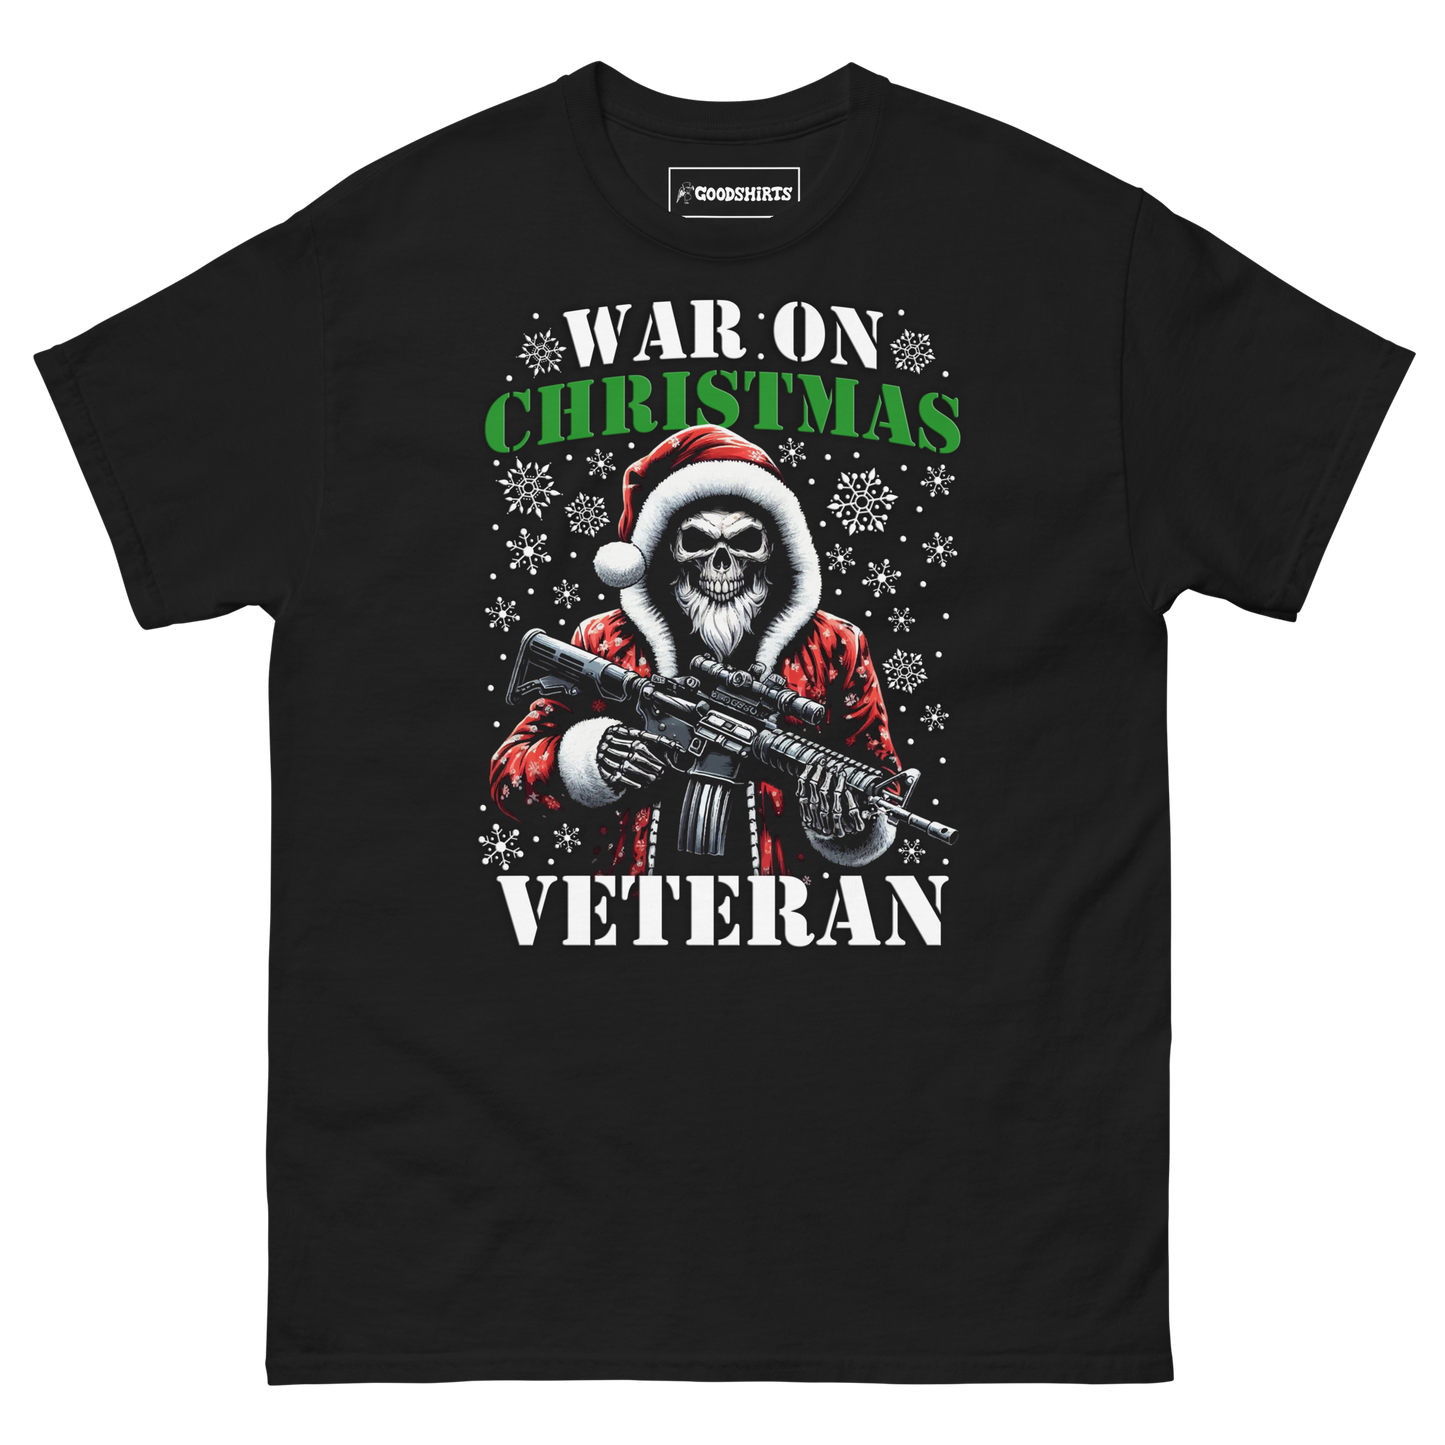 War On Christmas Veteran.